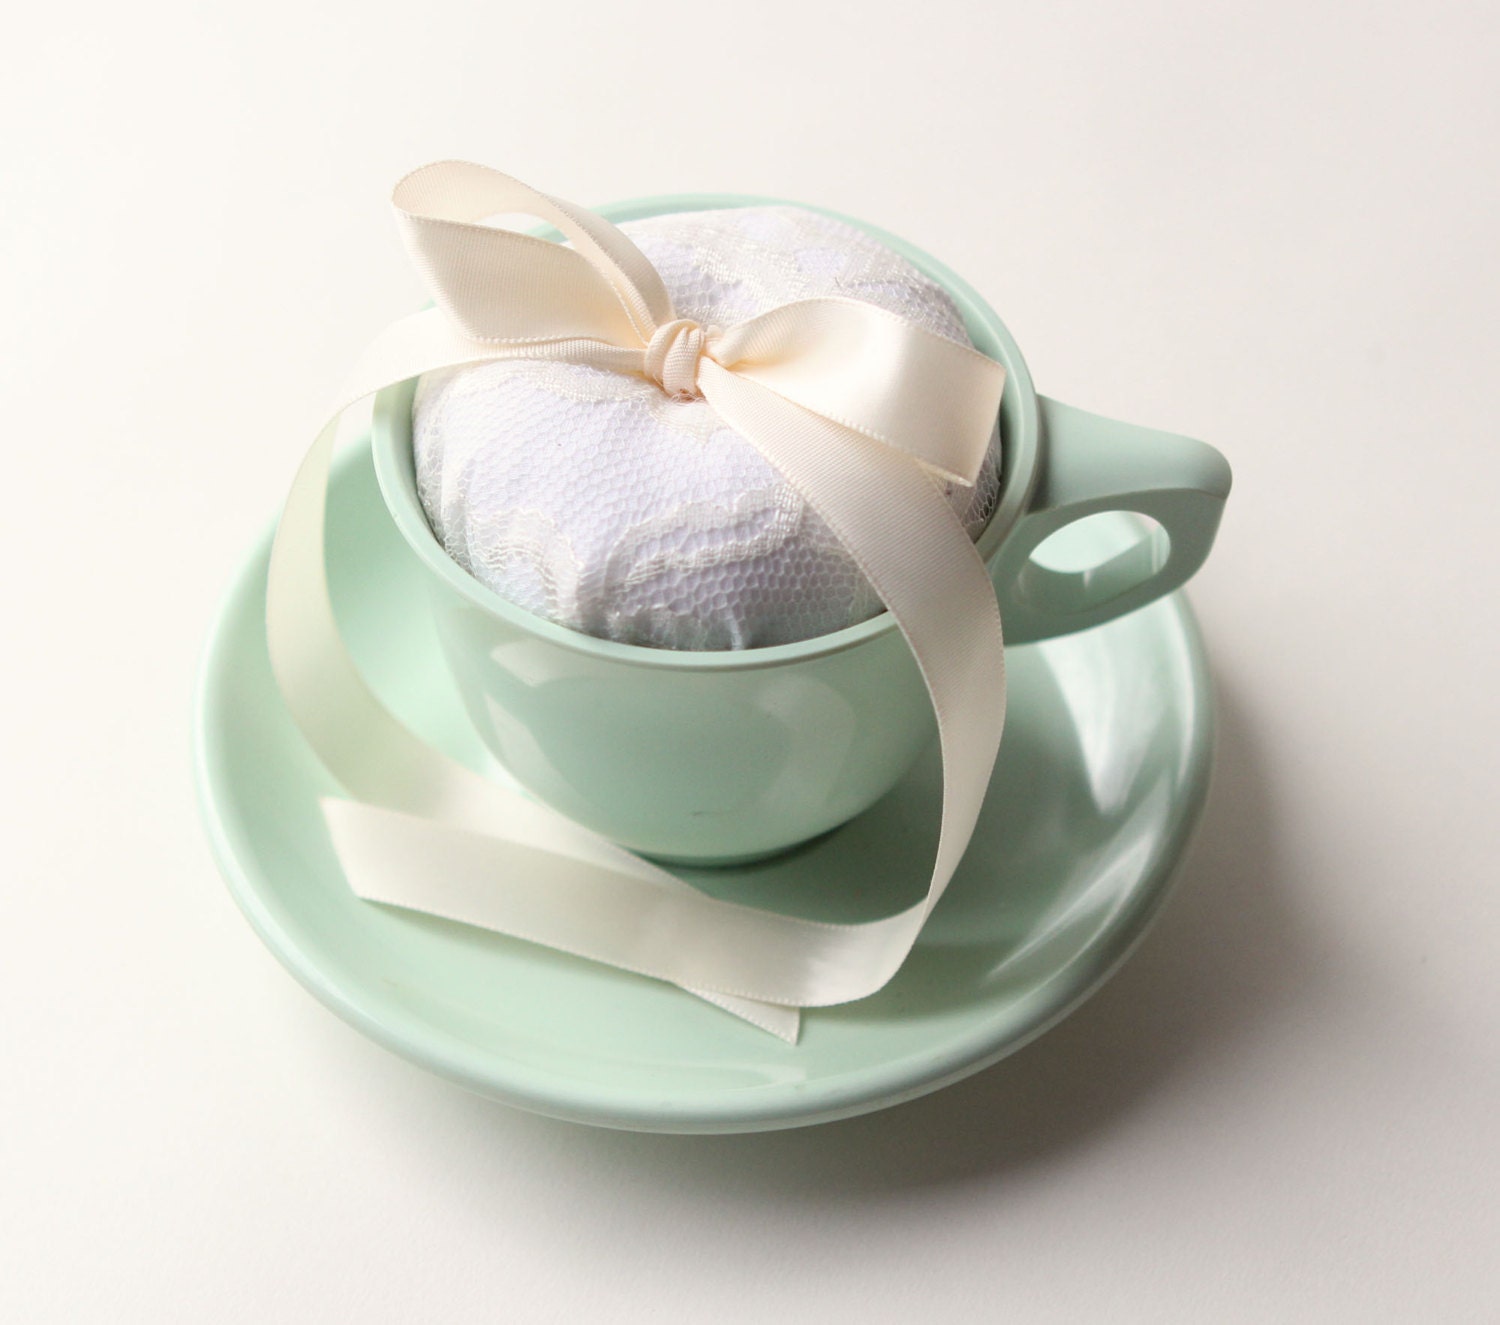 tea cup ring bearer pillow - plastic melmac, jadite green, vintage cup and saucer, wedding decor